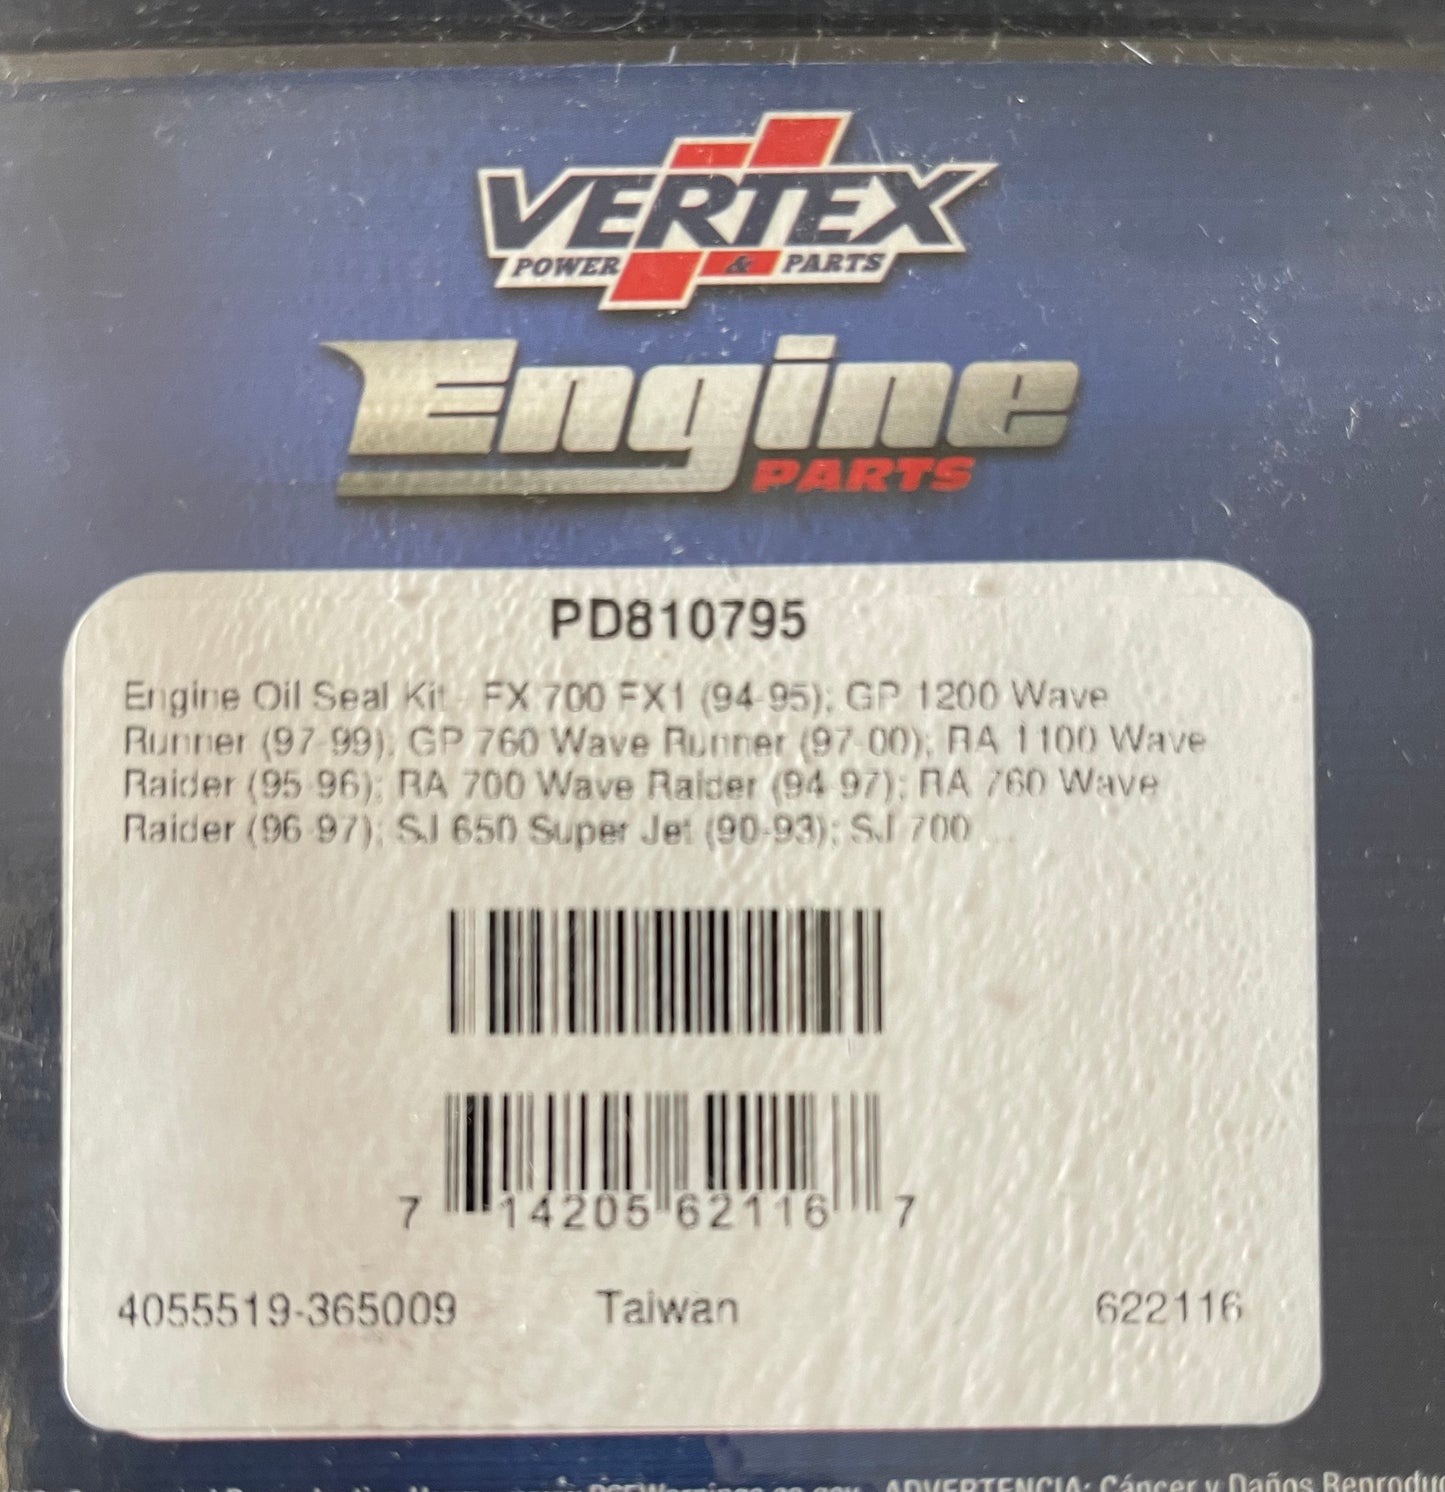 Vertex Crank seal Kit for Yamaha Jet Ski SJ650 SJ701 RA700 WB700 GP760 WR100 RA1100 GP1200 XL1200 PD810795